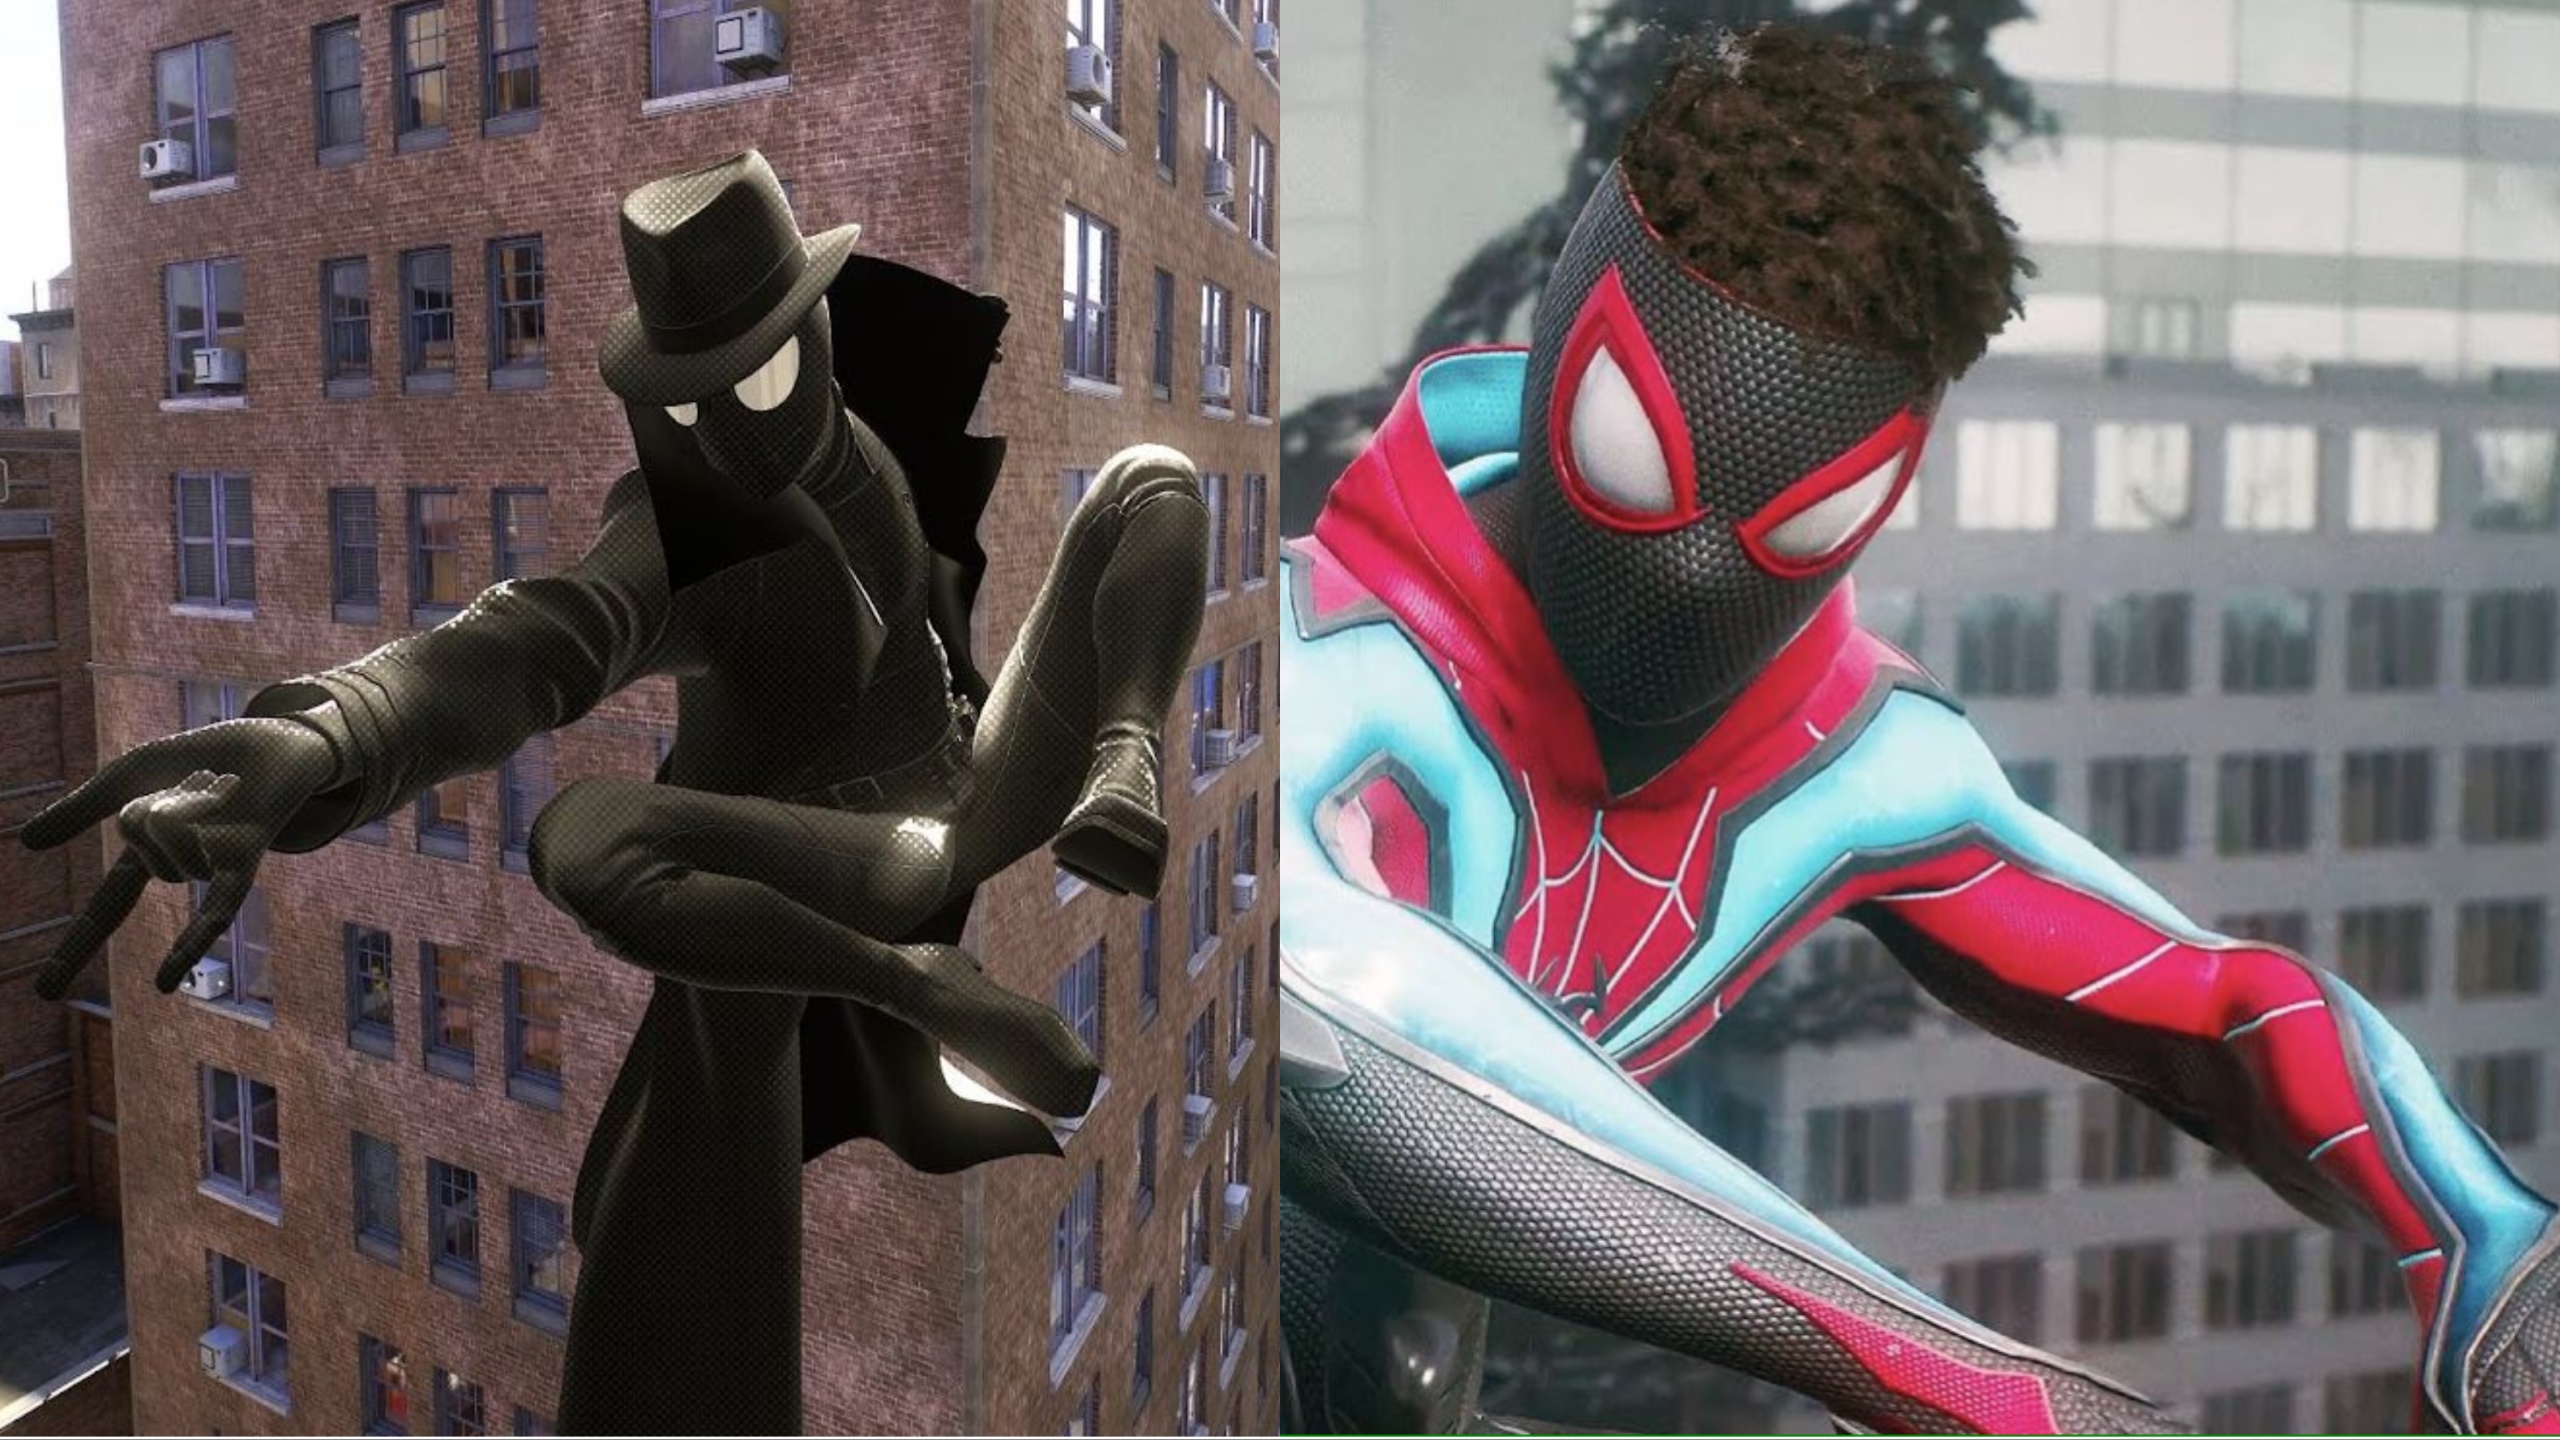 Marvel's Spider-Man 2 Fan Creates Interesting DLC Concepts